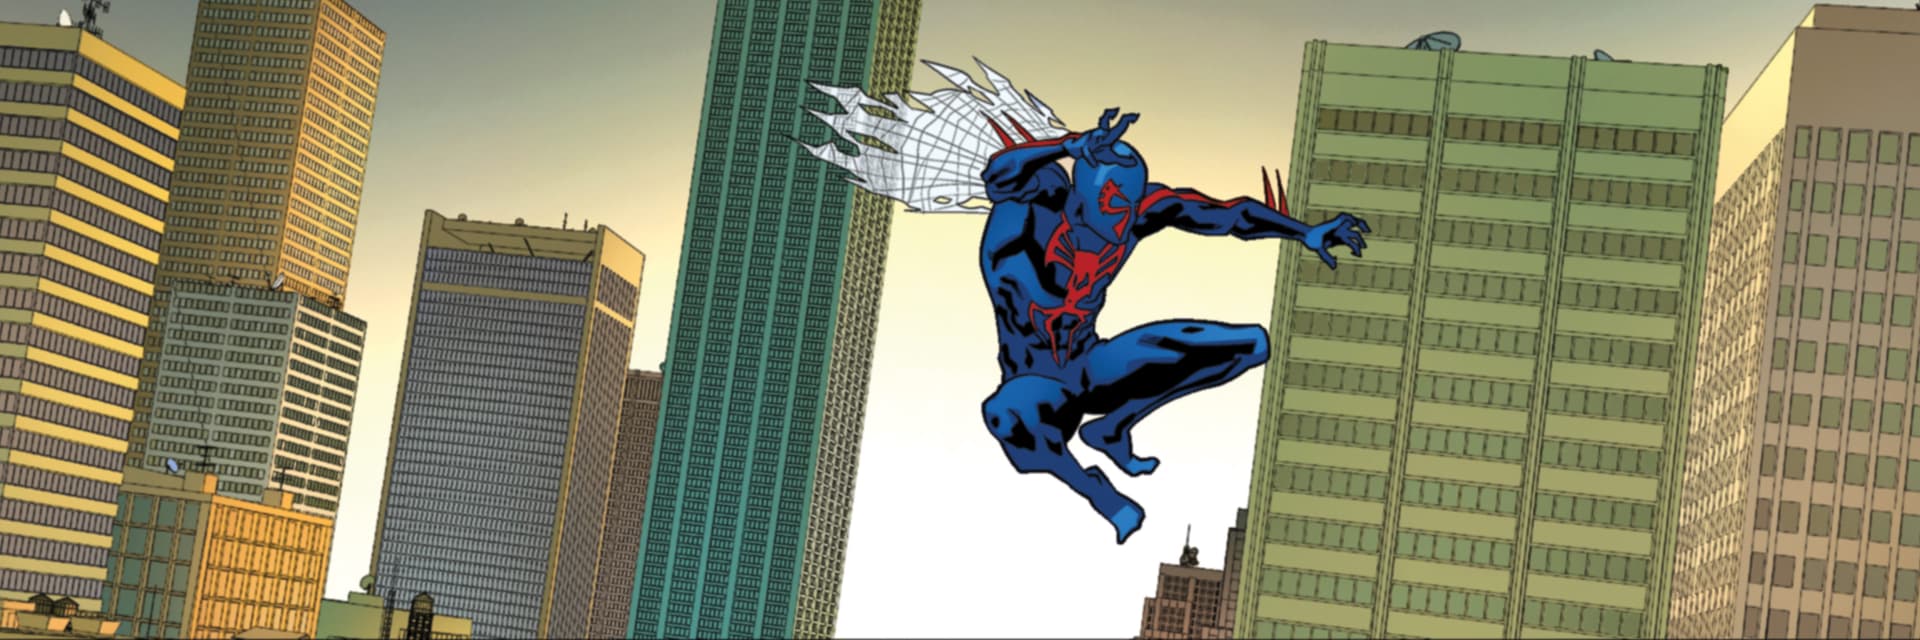 File:Spider-Man.jpg - Simple English Wikipedia, the free encyclopedia